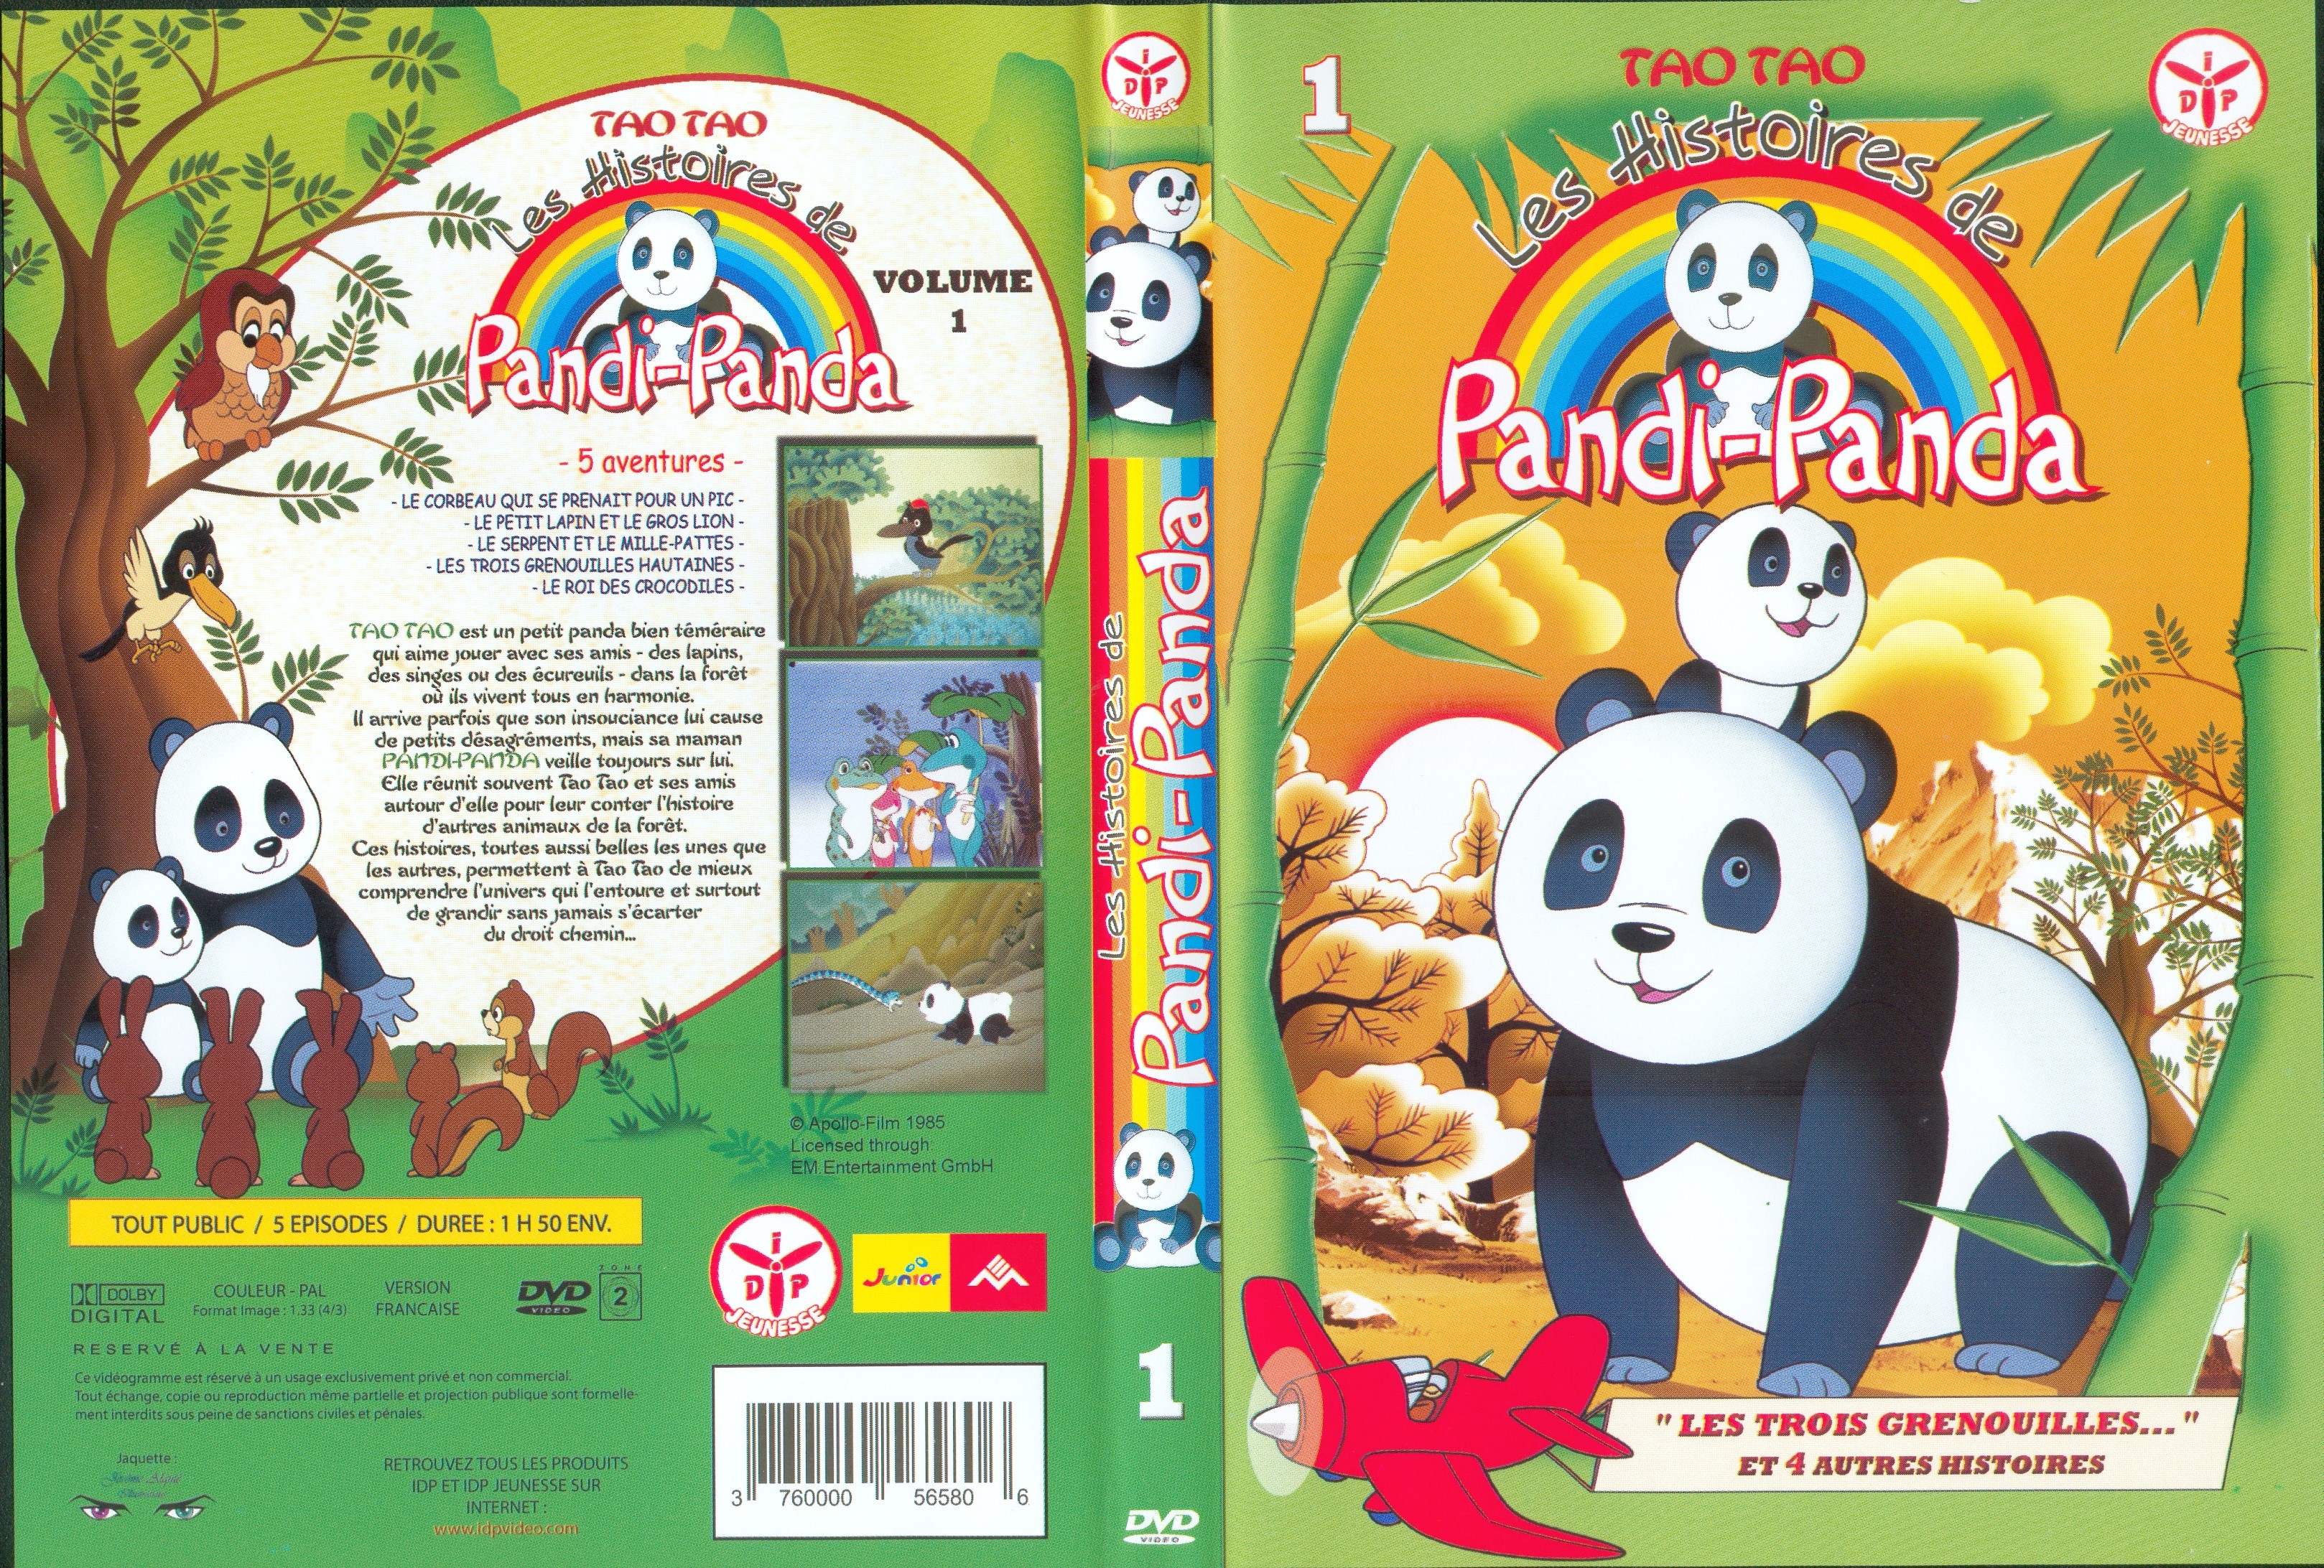 Jaquette DVD Pandi panda vol 1